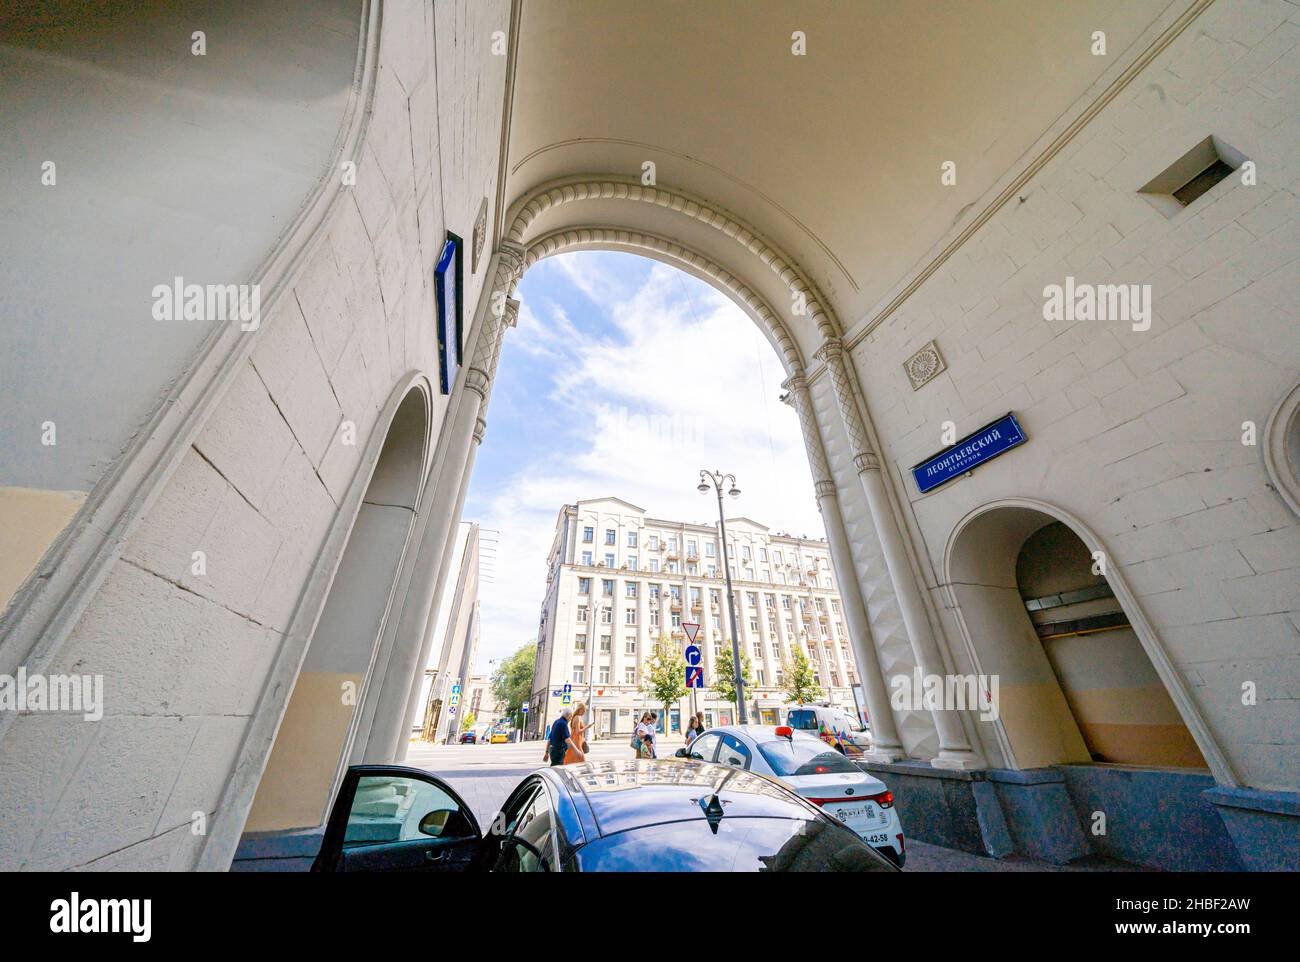 Stalinist architectrure- Arch su Tverskaya 15 edificio, Stalinist socialist classicism, Mosca, Russia Foto Stock